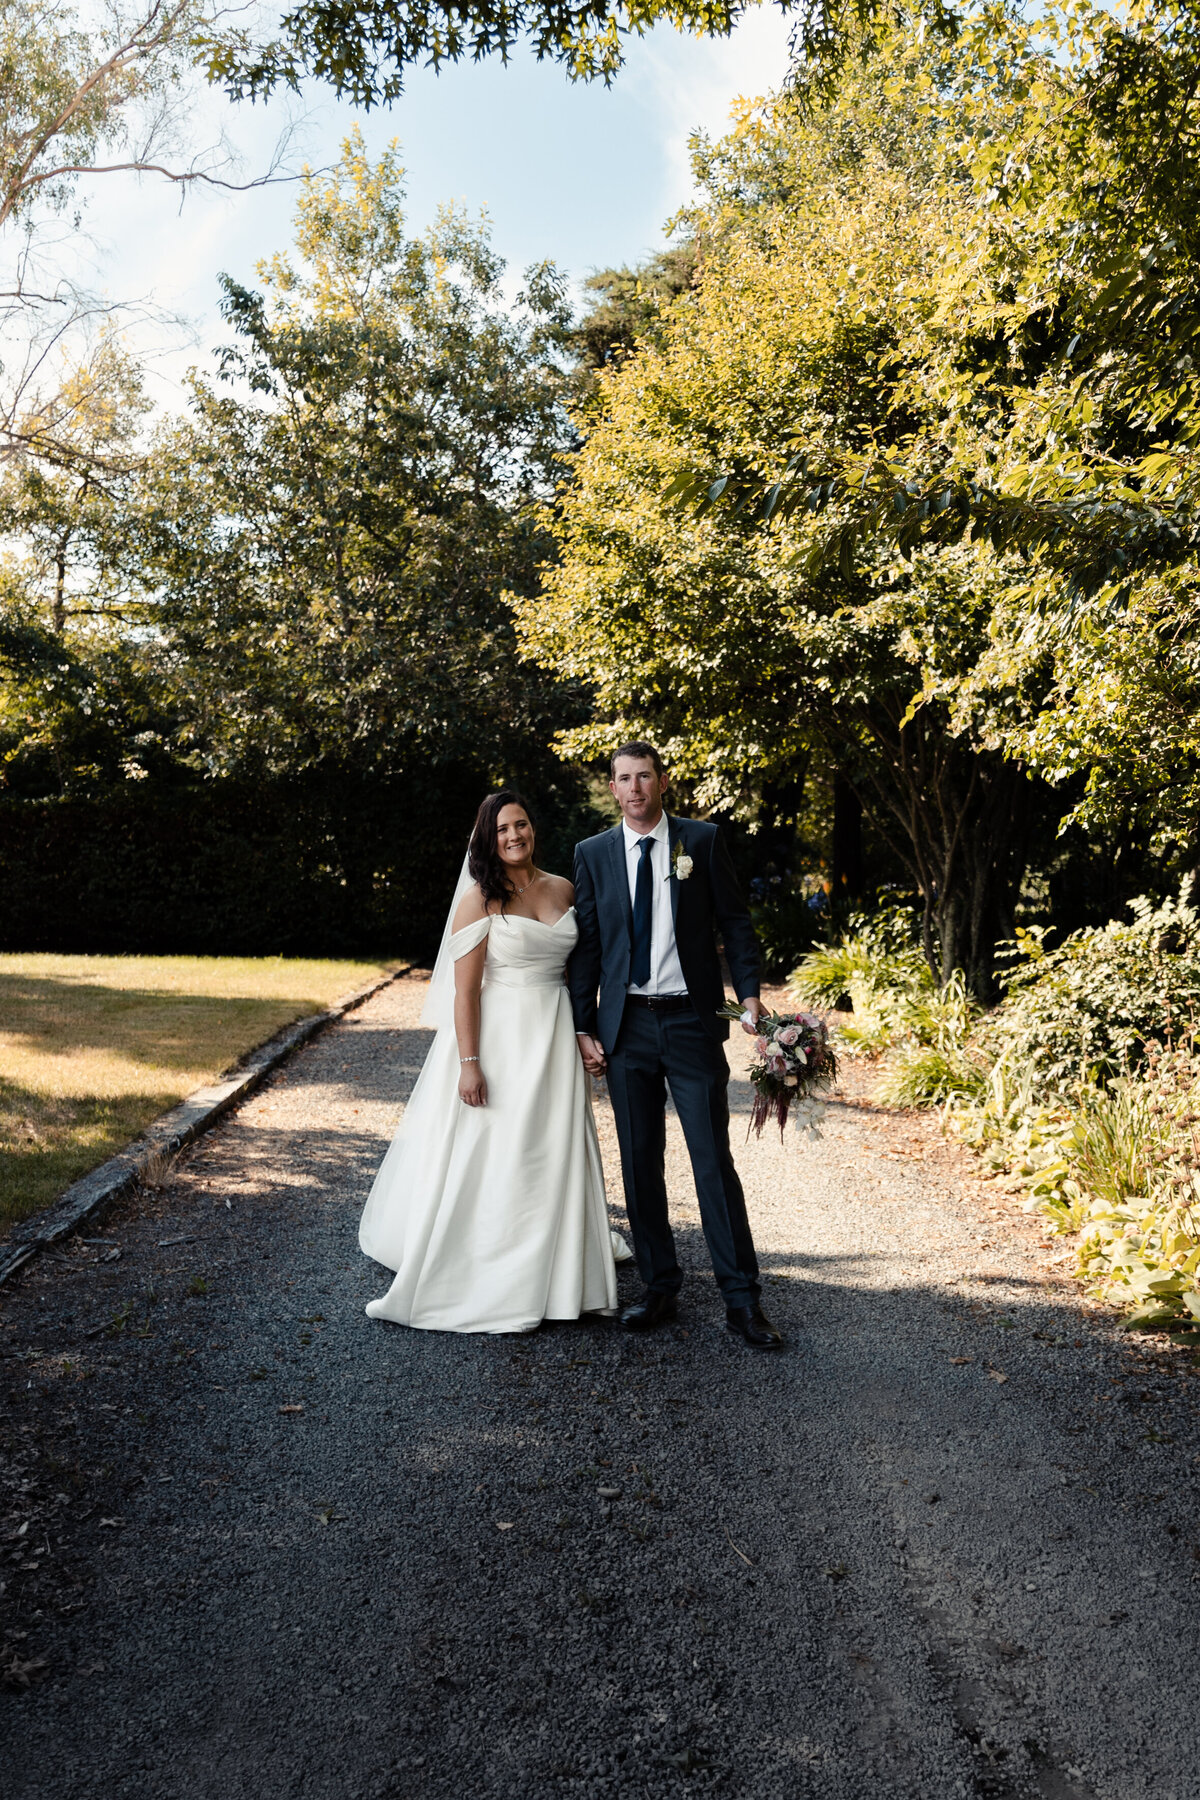 Matt & Emma - Indevin Bankhouse - Malborough Blenheim wedding 2023 - Roam Ahead weddings-1135